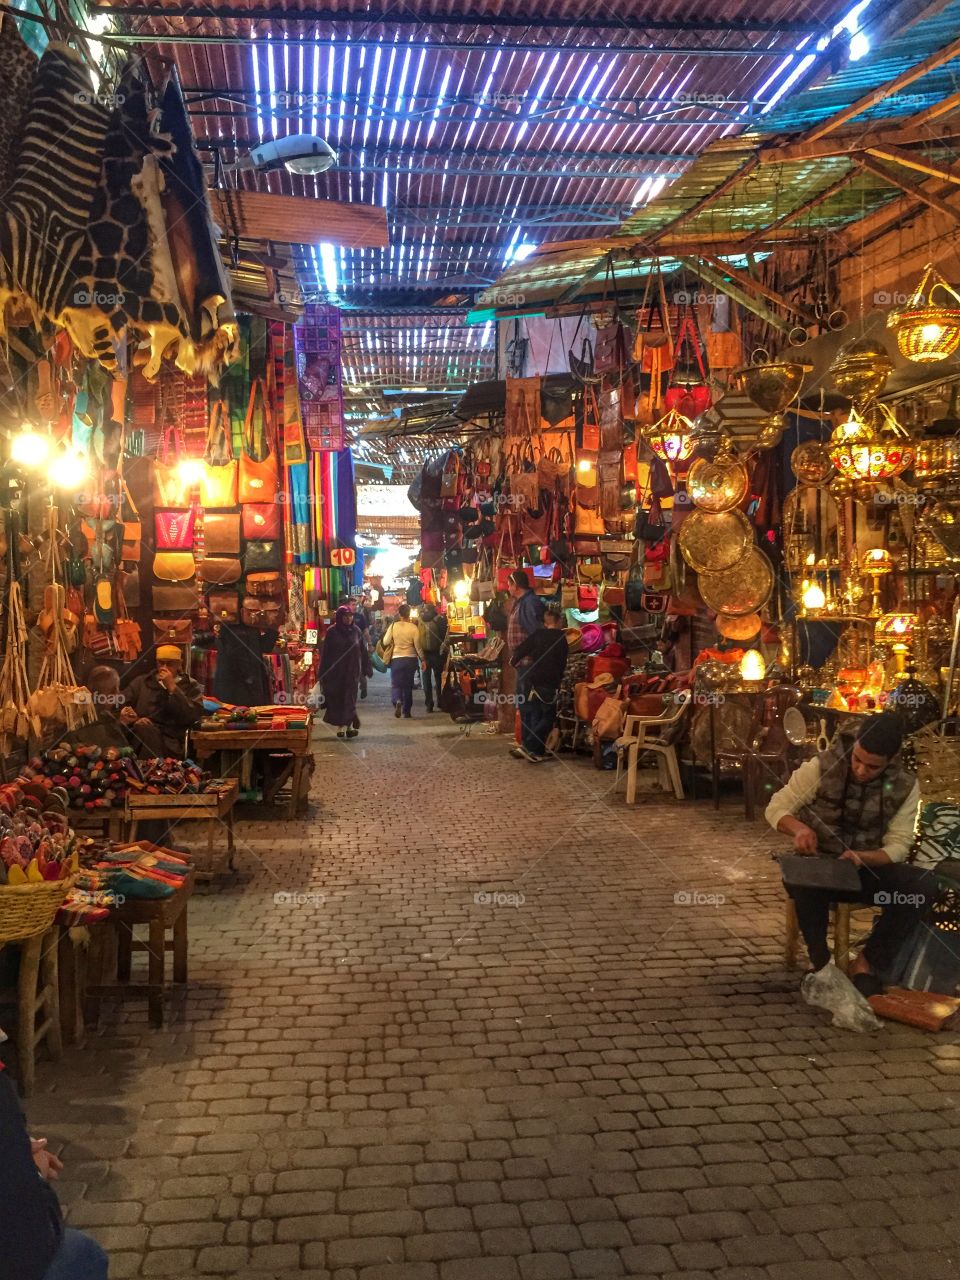 An alley inside one of Marrakech's souks